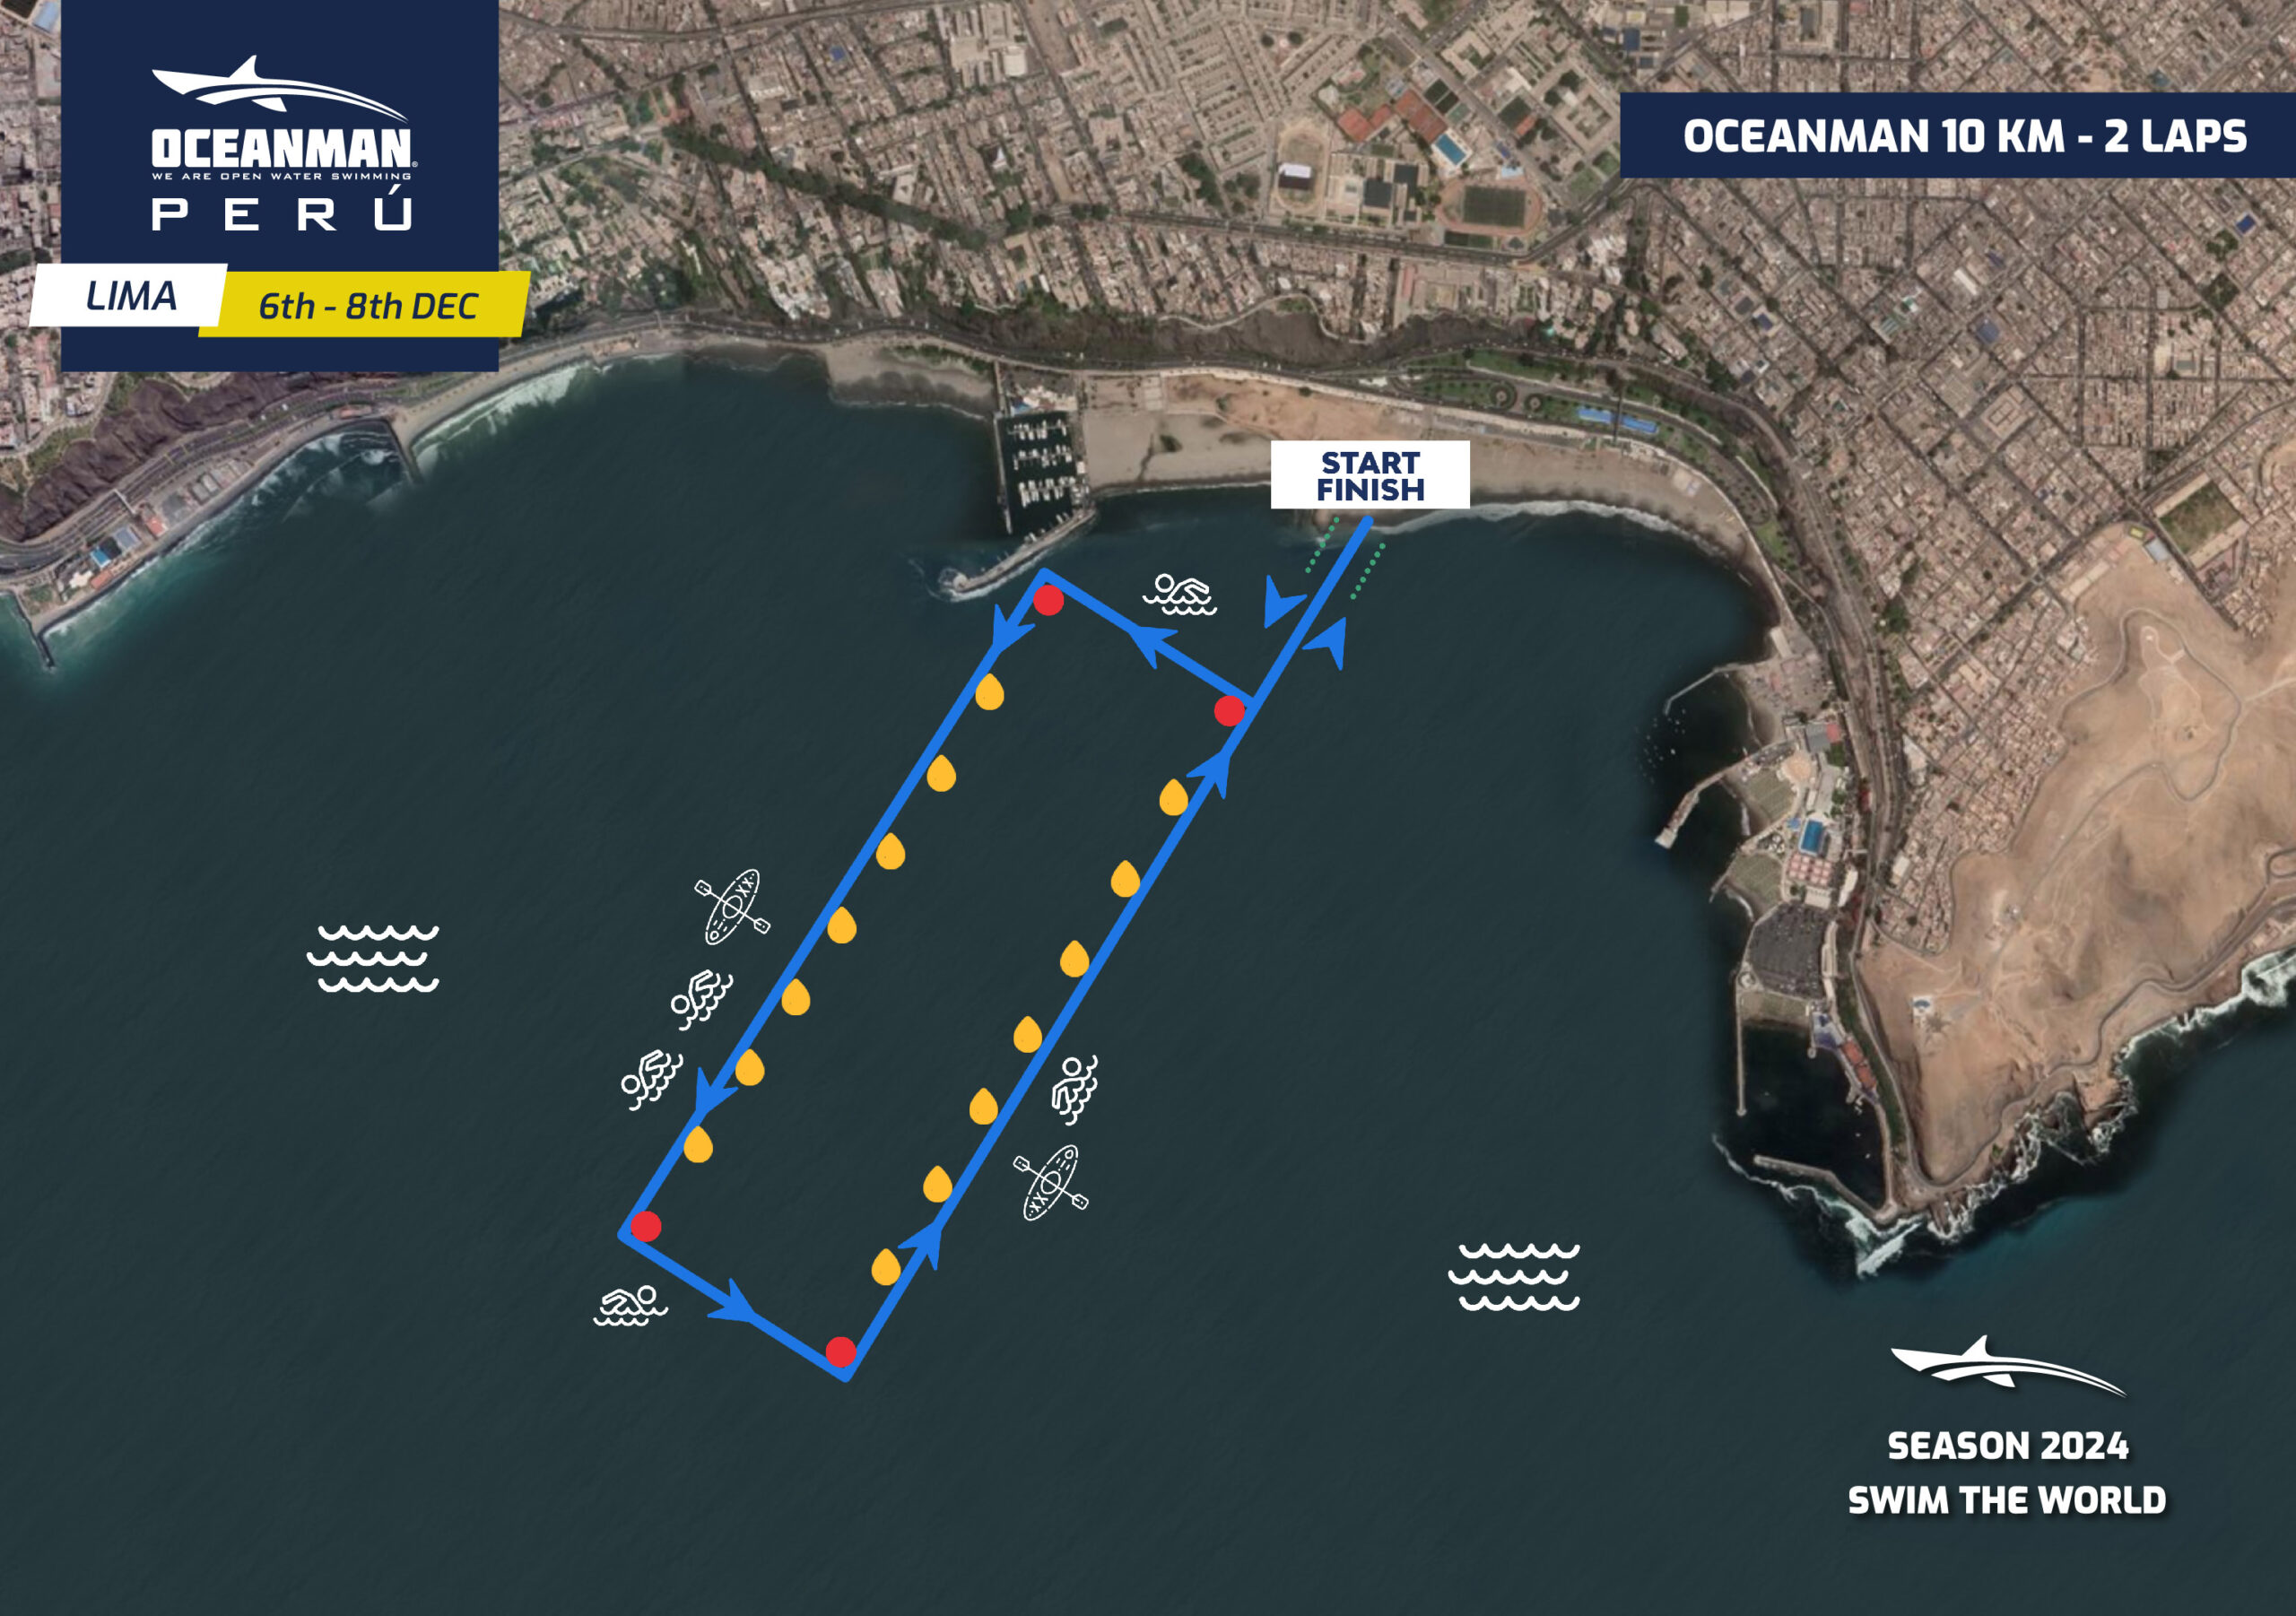 Lima - Oceanman 10 km